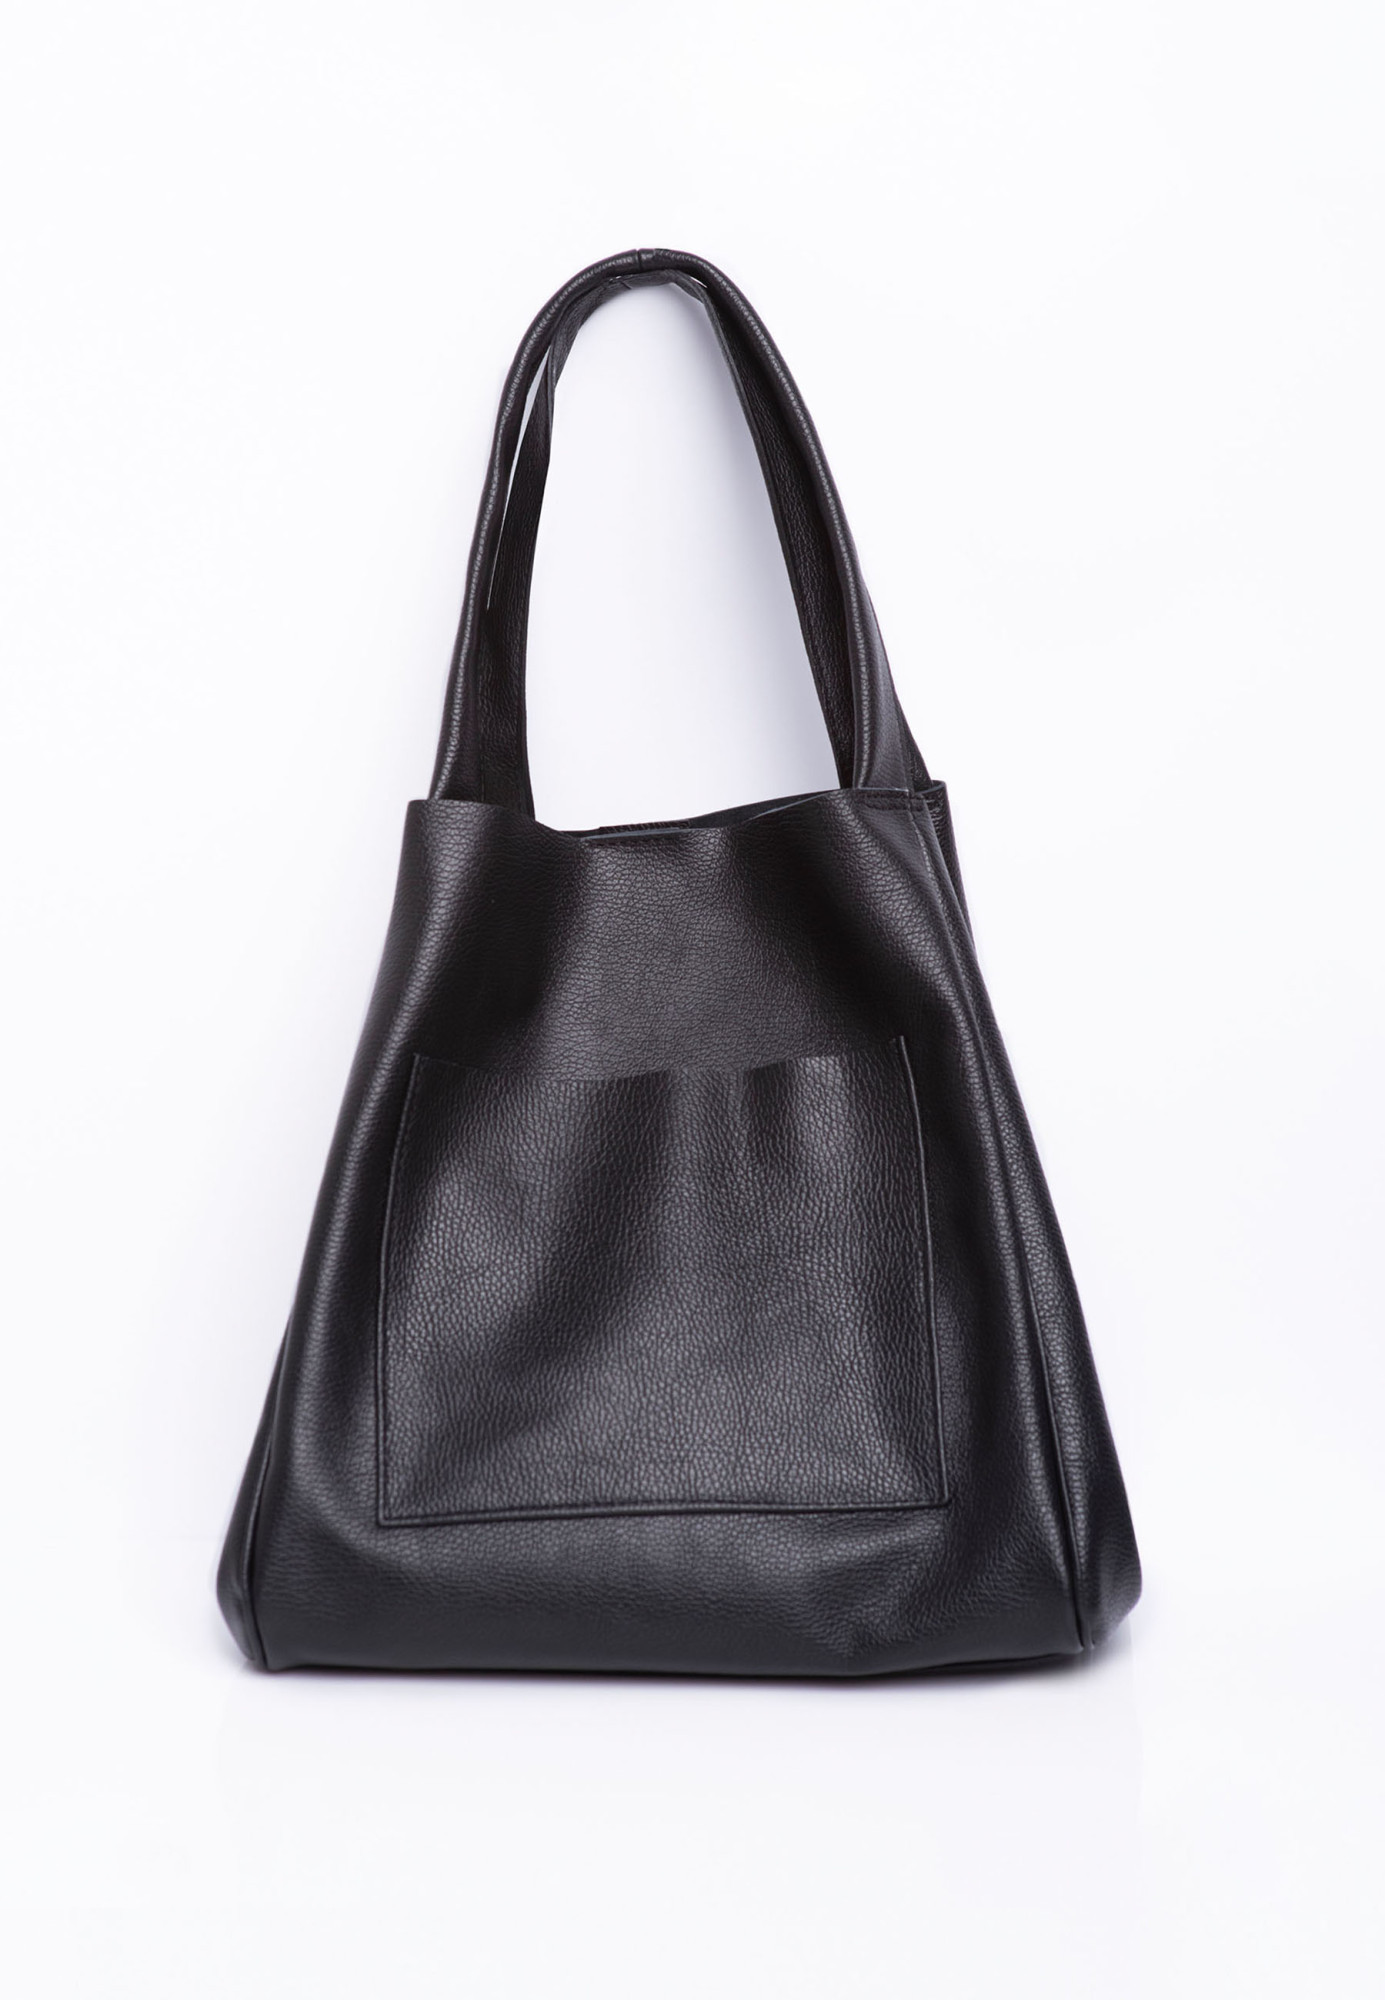 Look Made With Love Bag 570 Nairobi Black OS